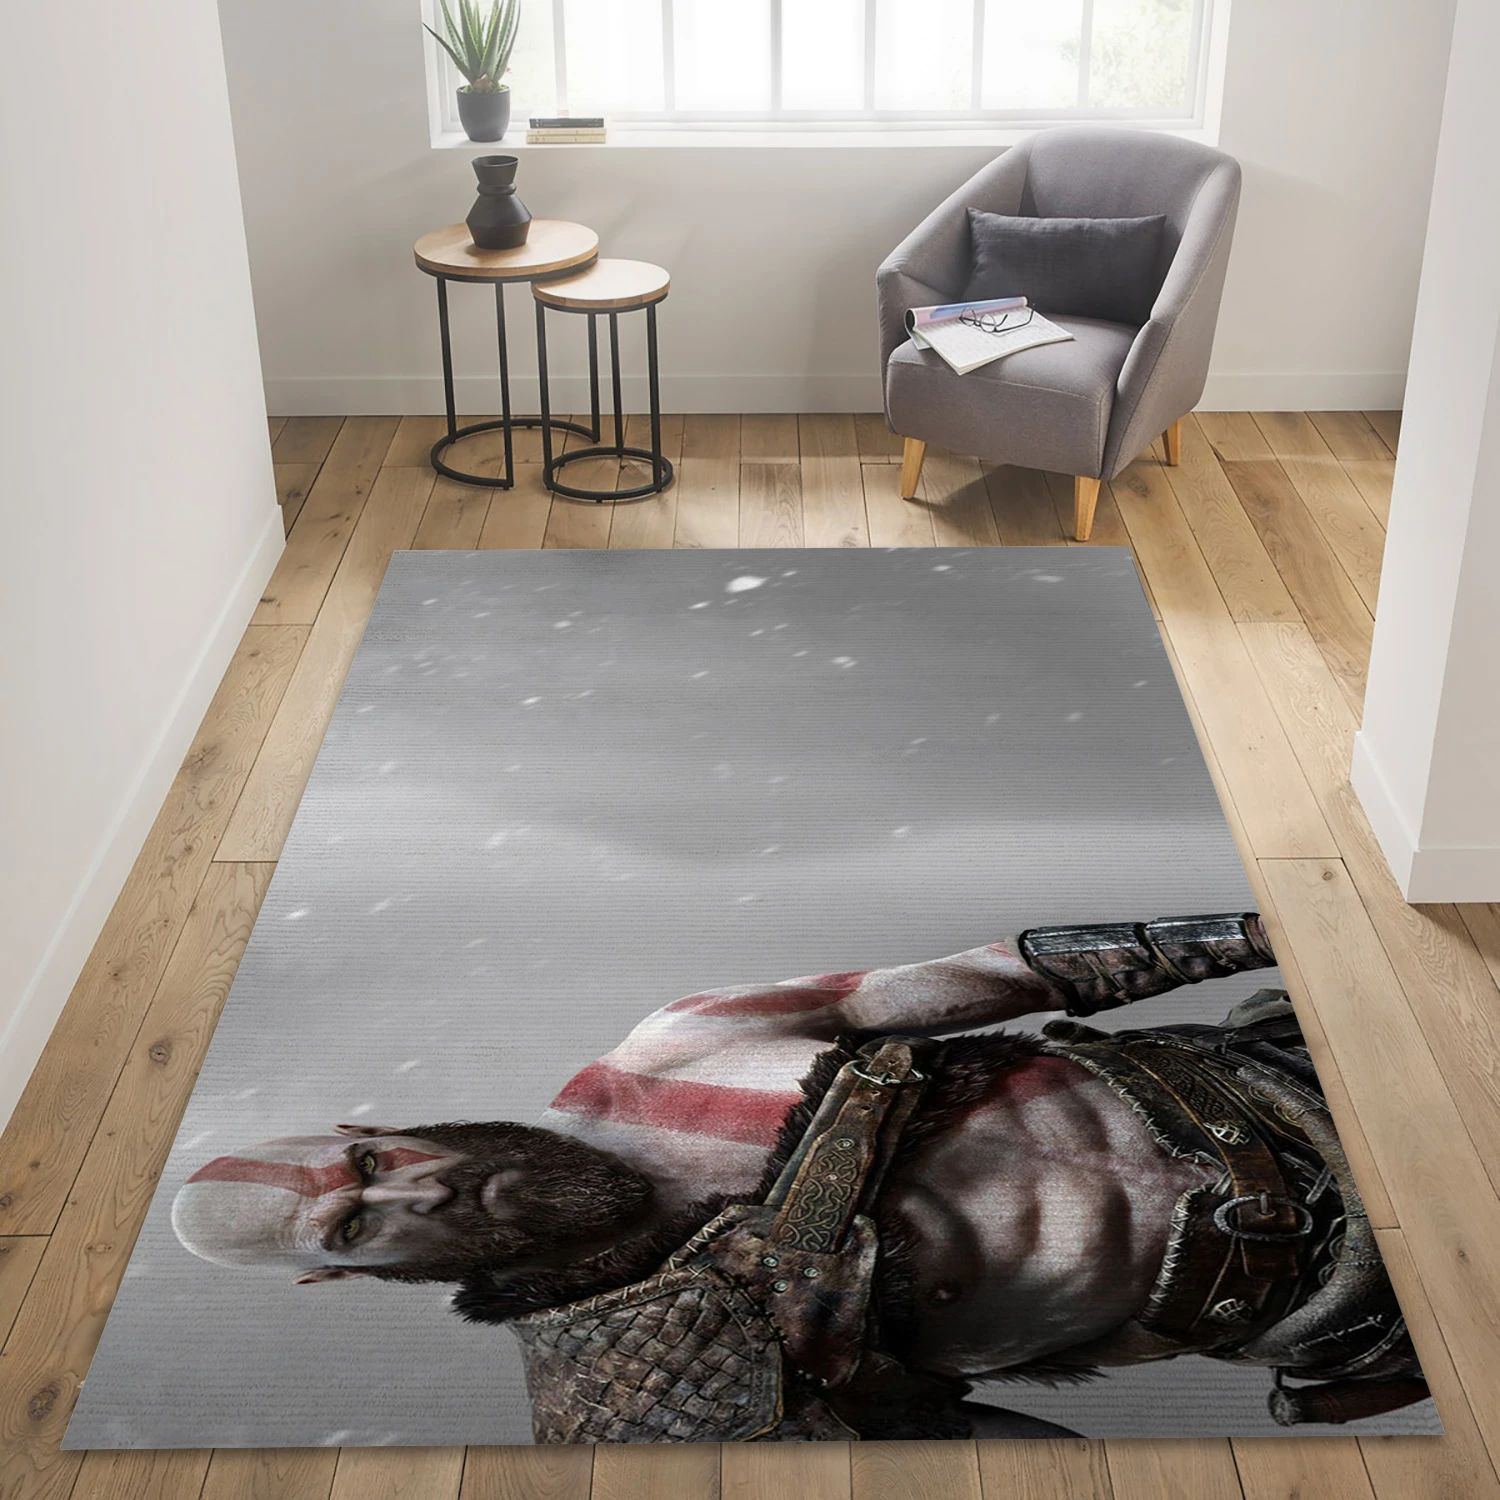 Kratos God Of War Video Game Area Rug Area, Bedroom Rug - Christmas Gift Decor - Indoor Outdoor Rugs 3